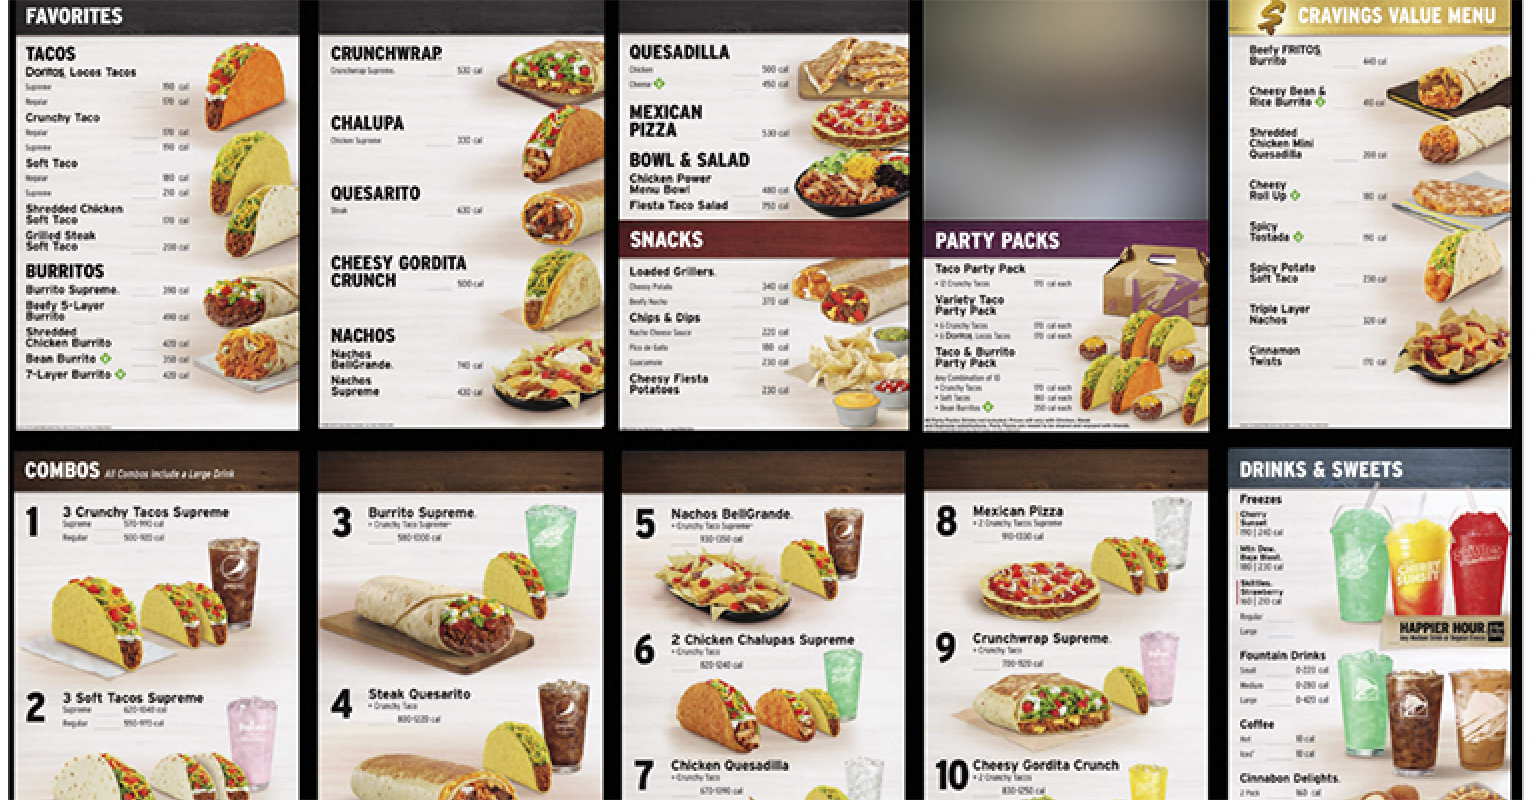 Mission Taco Menu Order Discount, Save 42 jlcatj.gob.mx